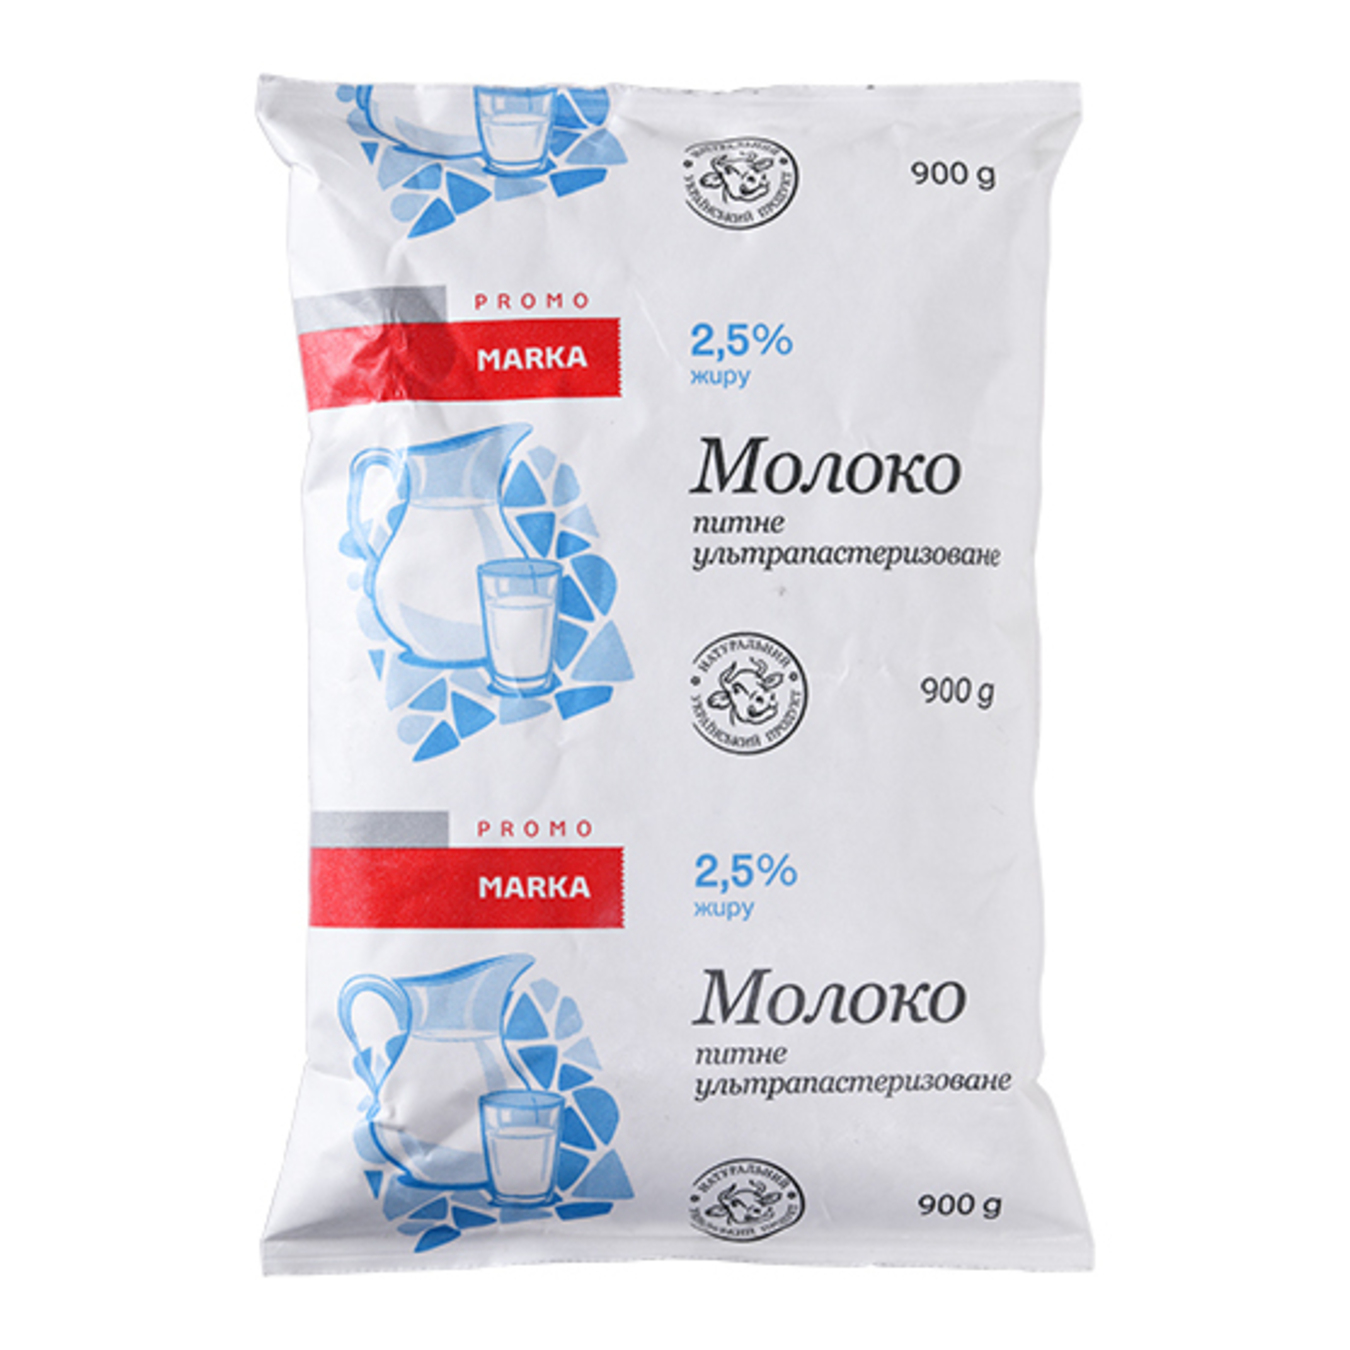 Milk Marka Promo Ultrapasteurized 2,5% 900g